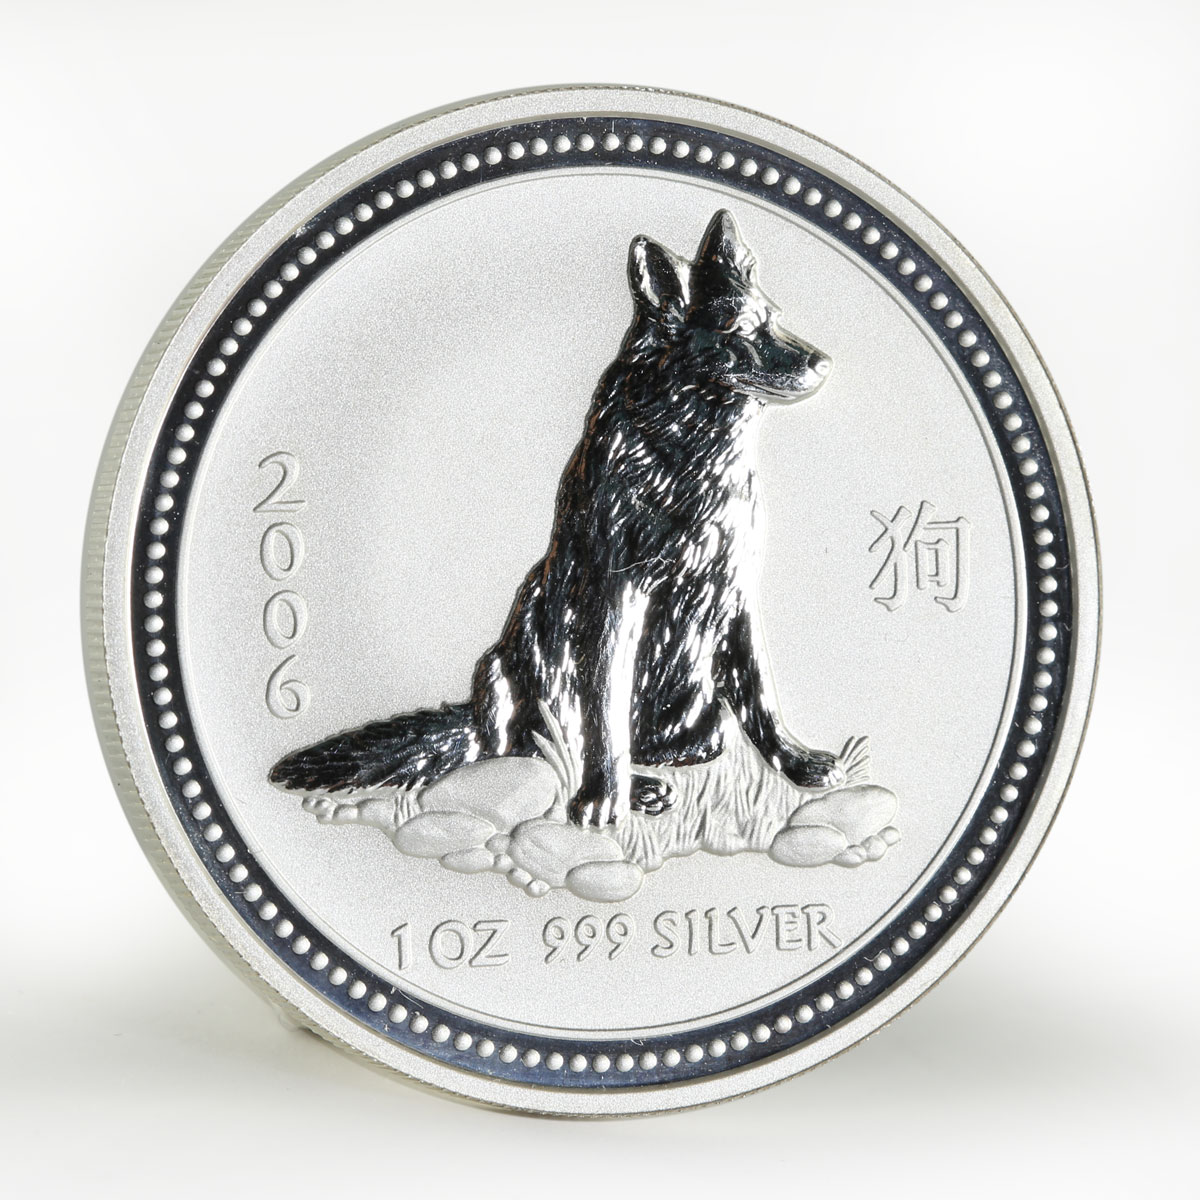 Australia 1 dollars Year of the Dog Lunar Series I silver coin 1oz 2006